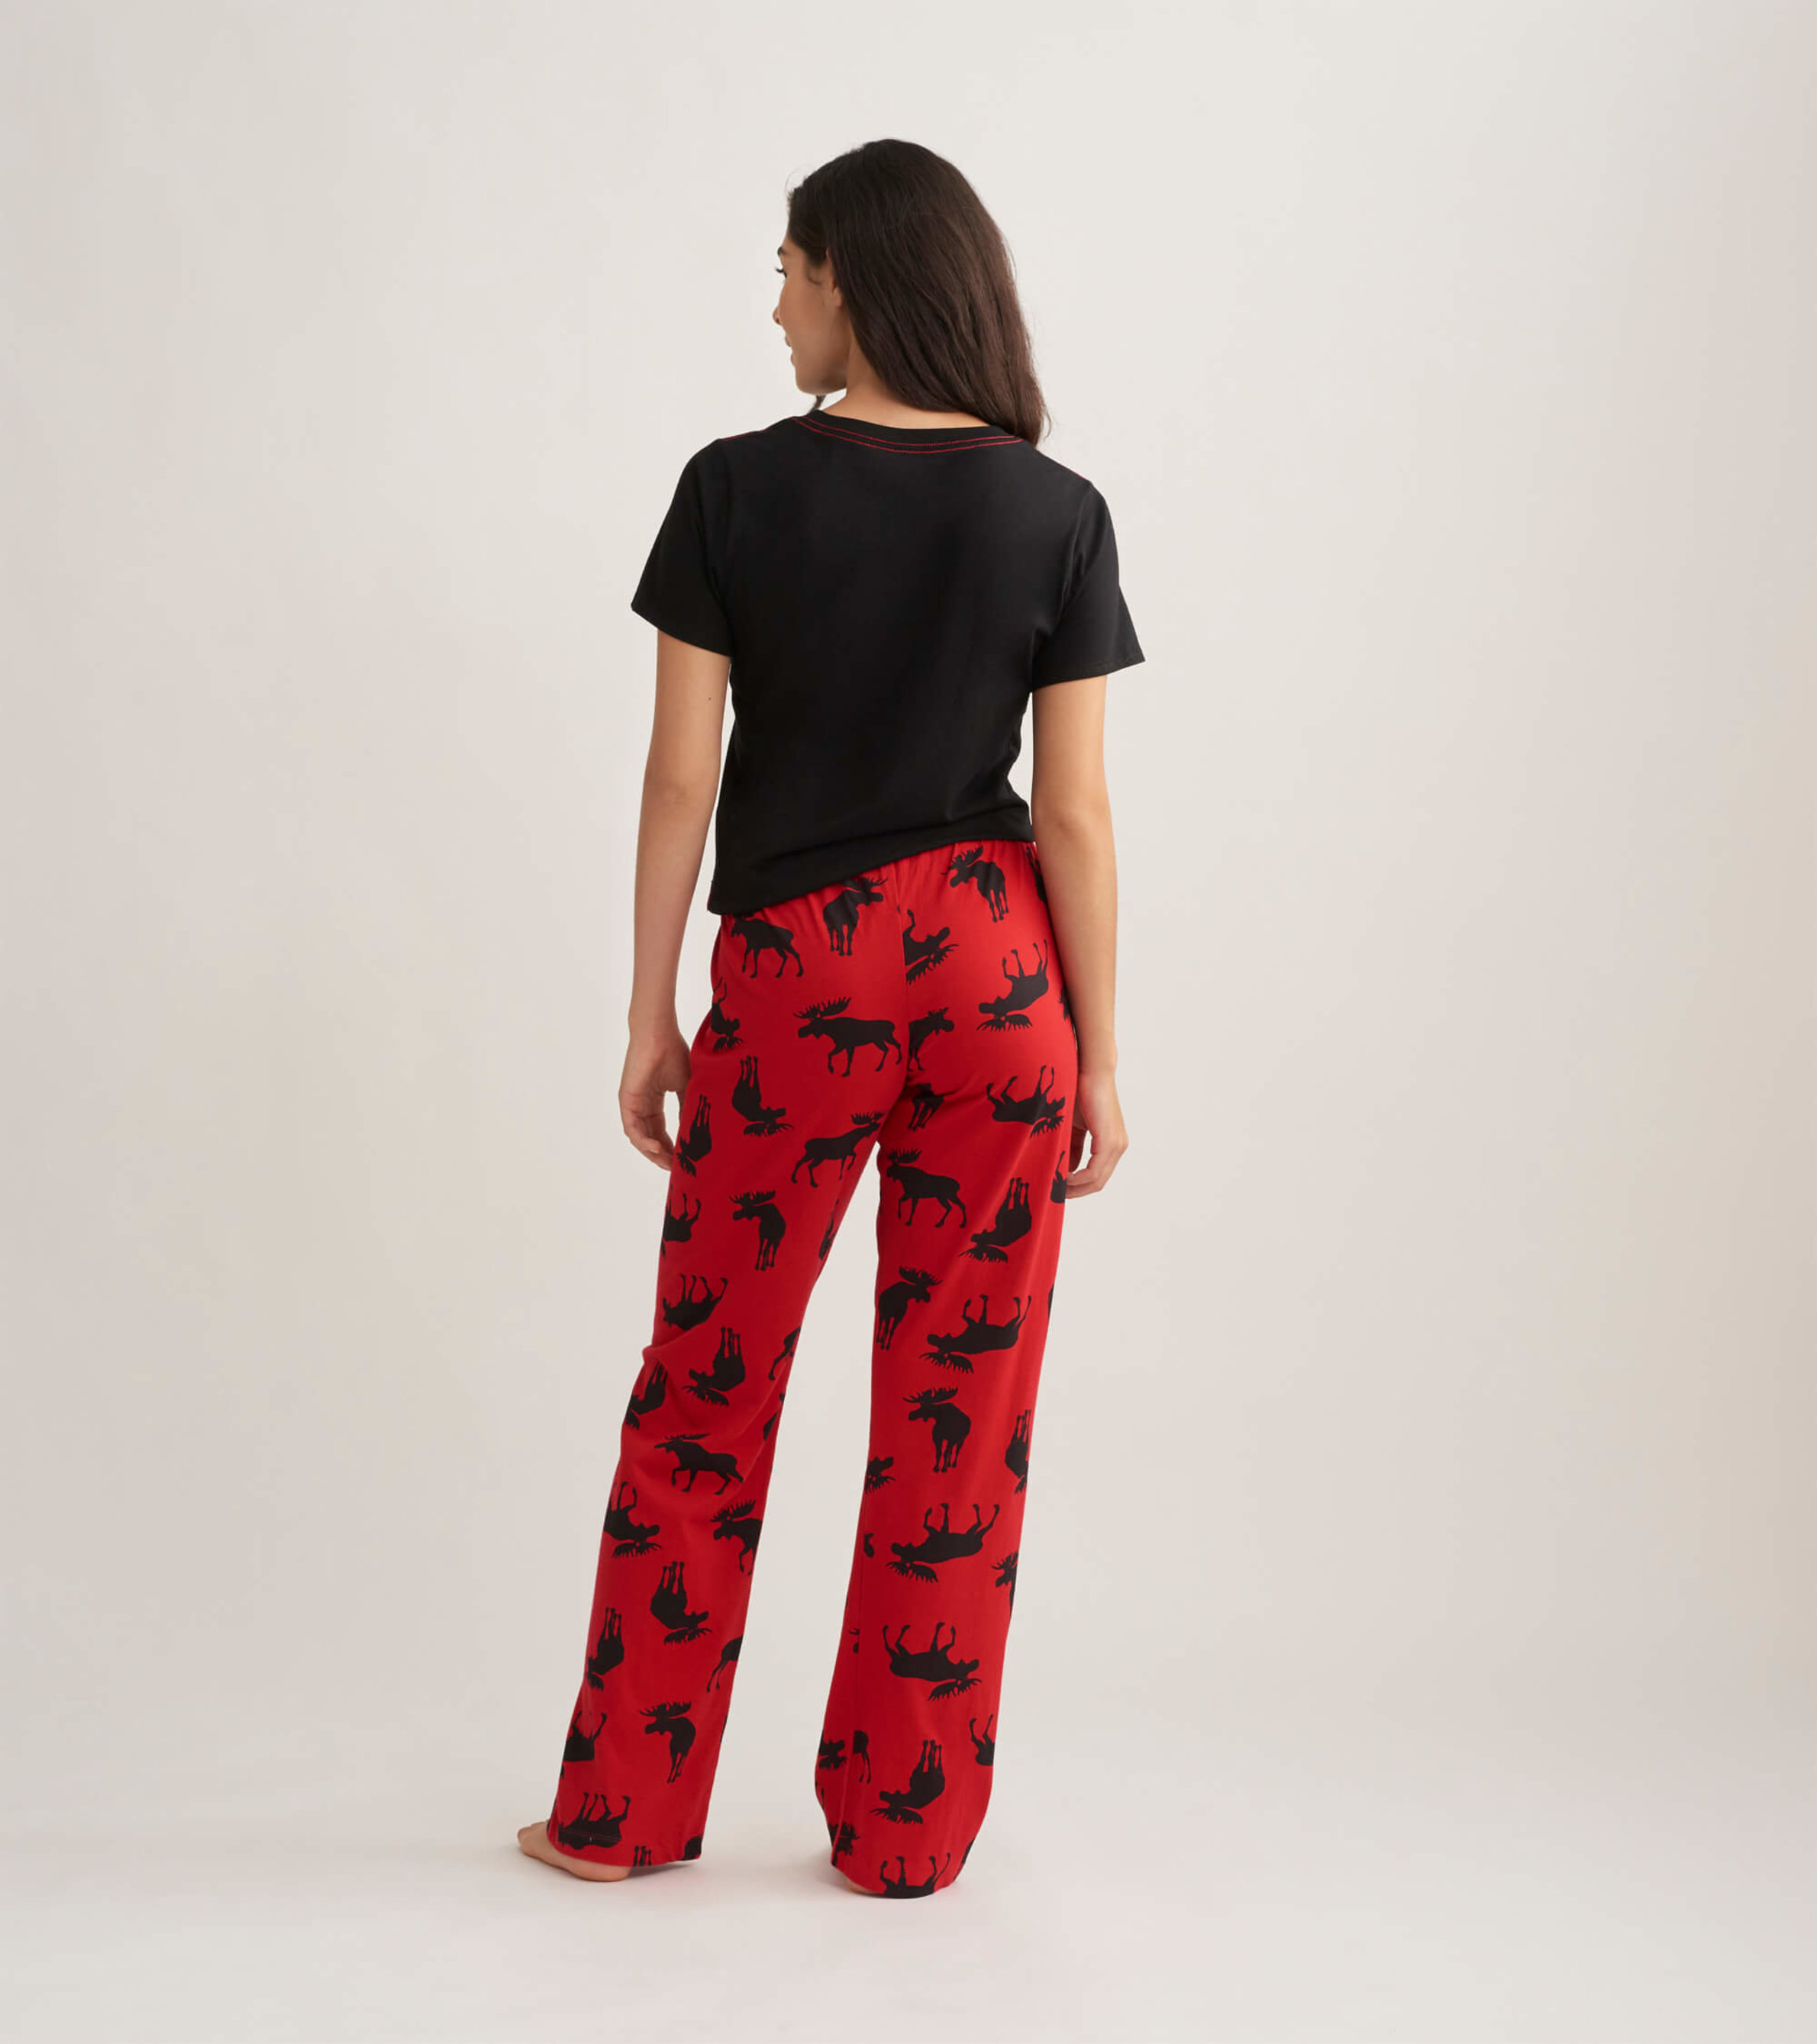 Leveret Womens Pajama Pants Fleece Lounge Sleep Pj Bottoms (Moose, X-Large)  